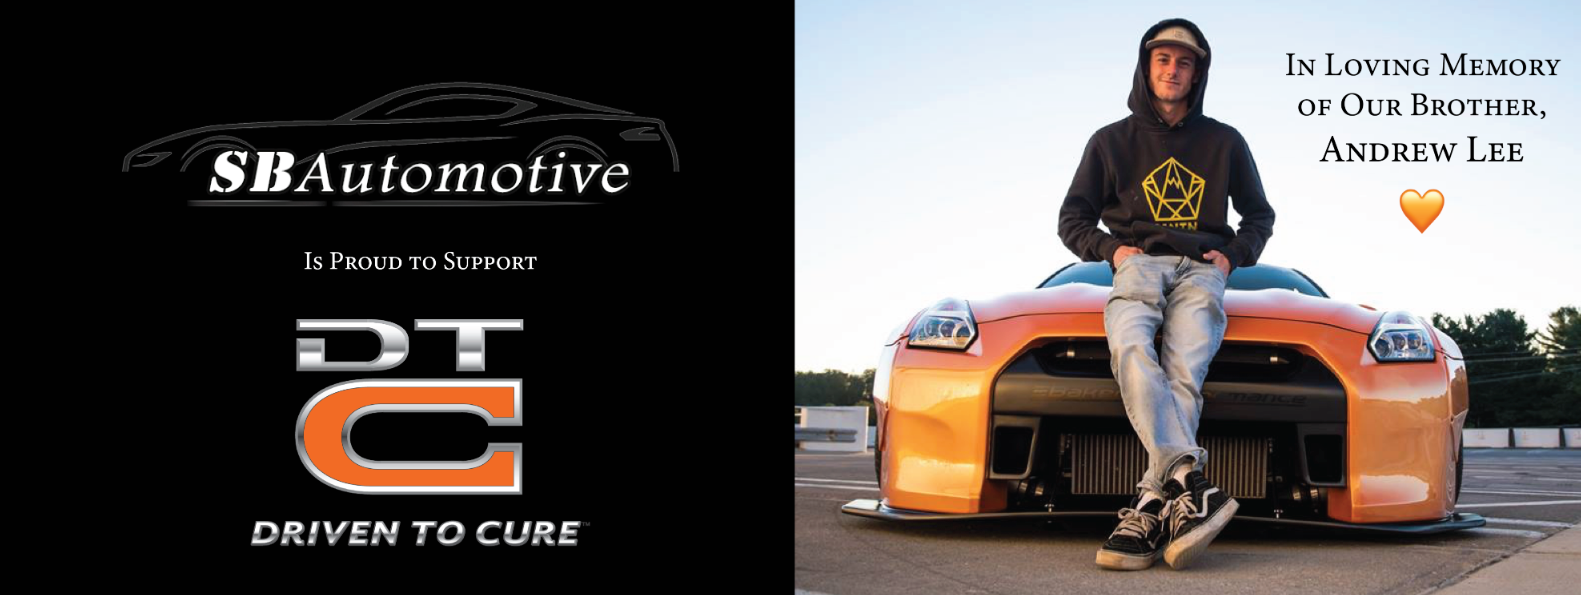 Driven to cure | SB Automotive